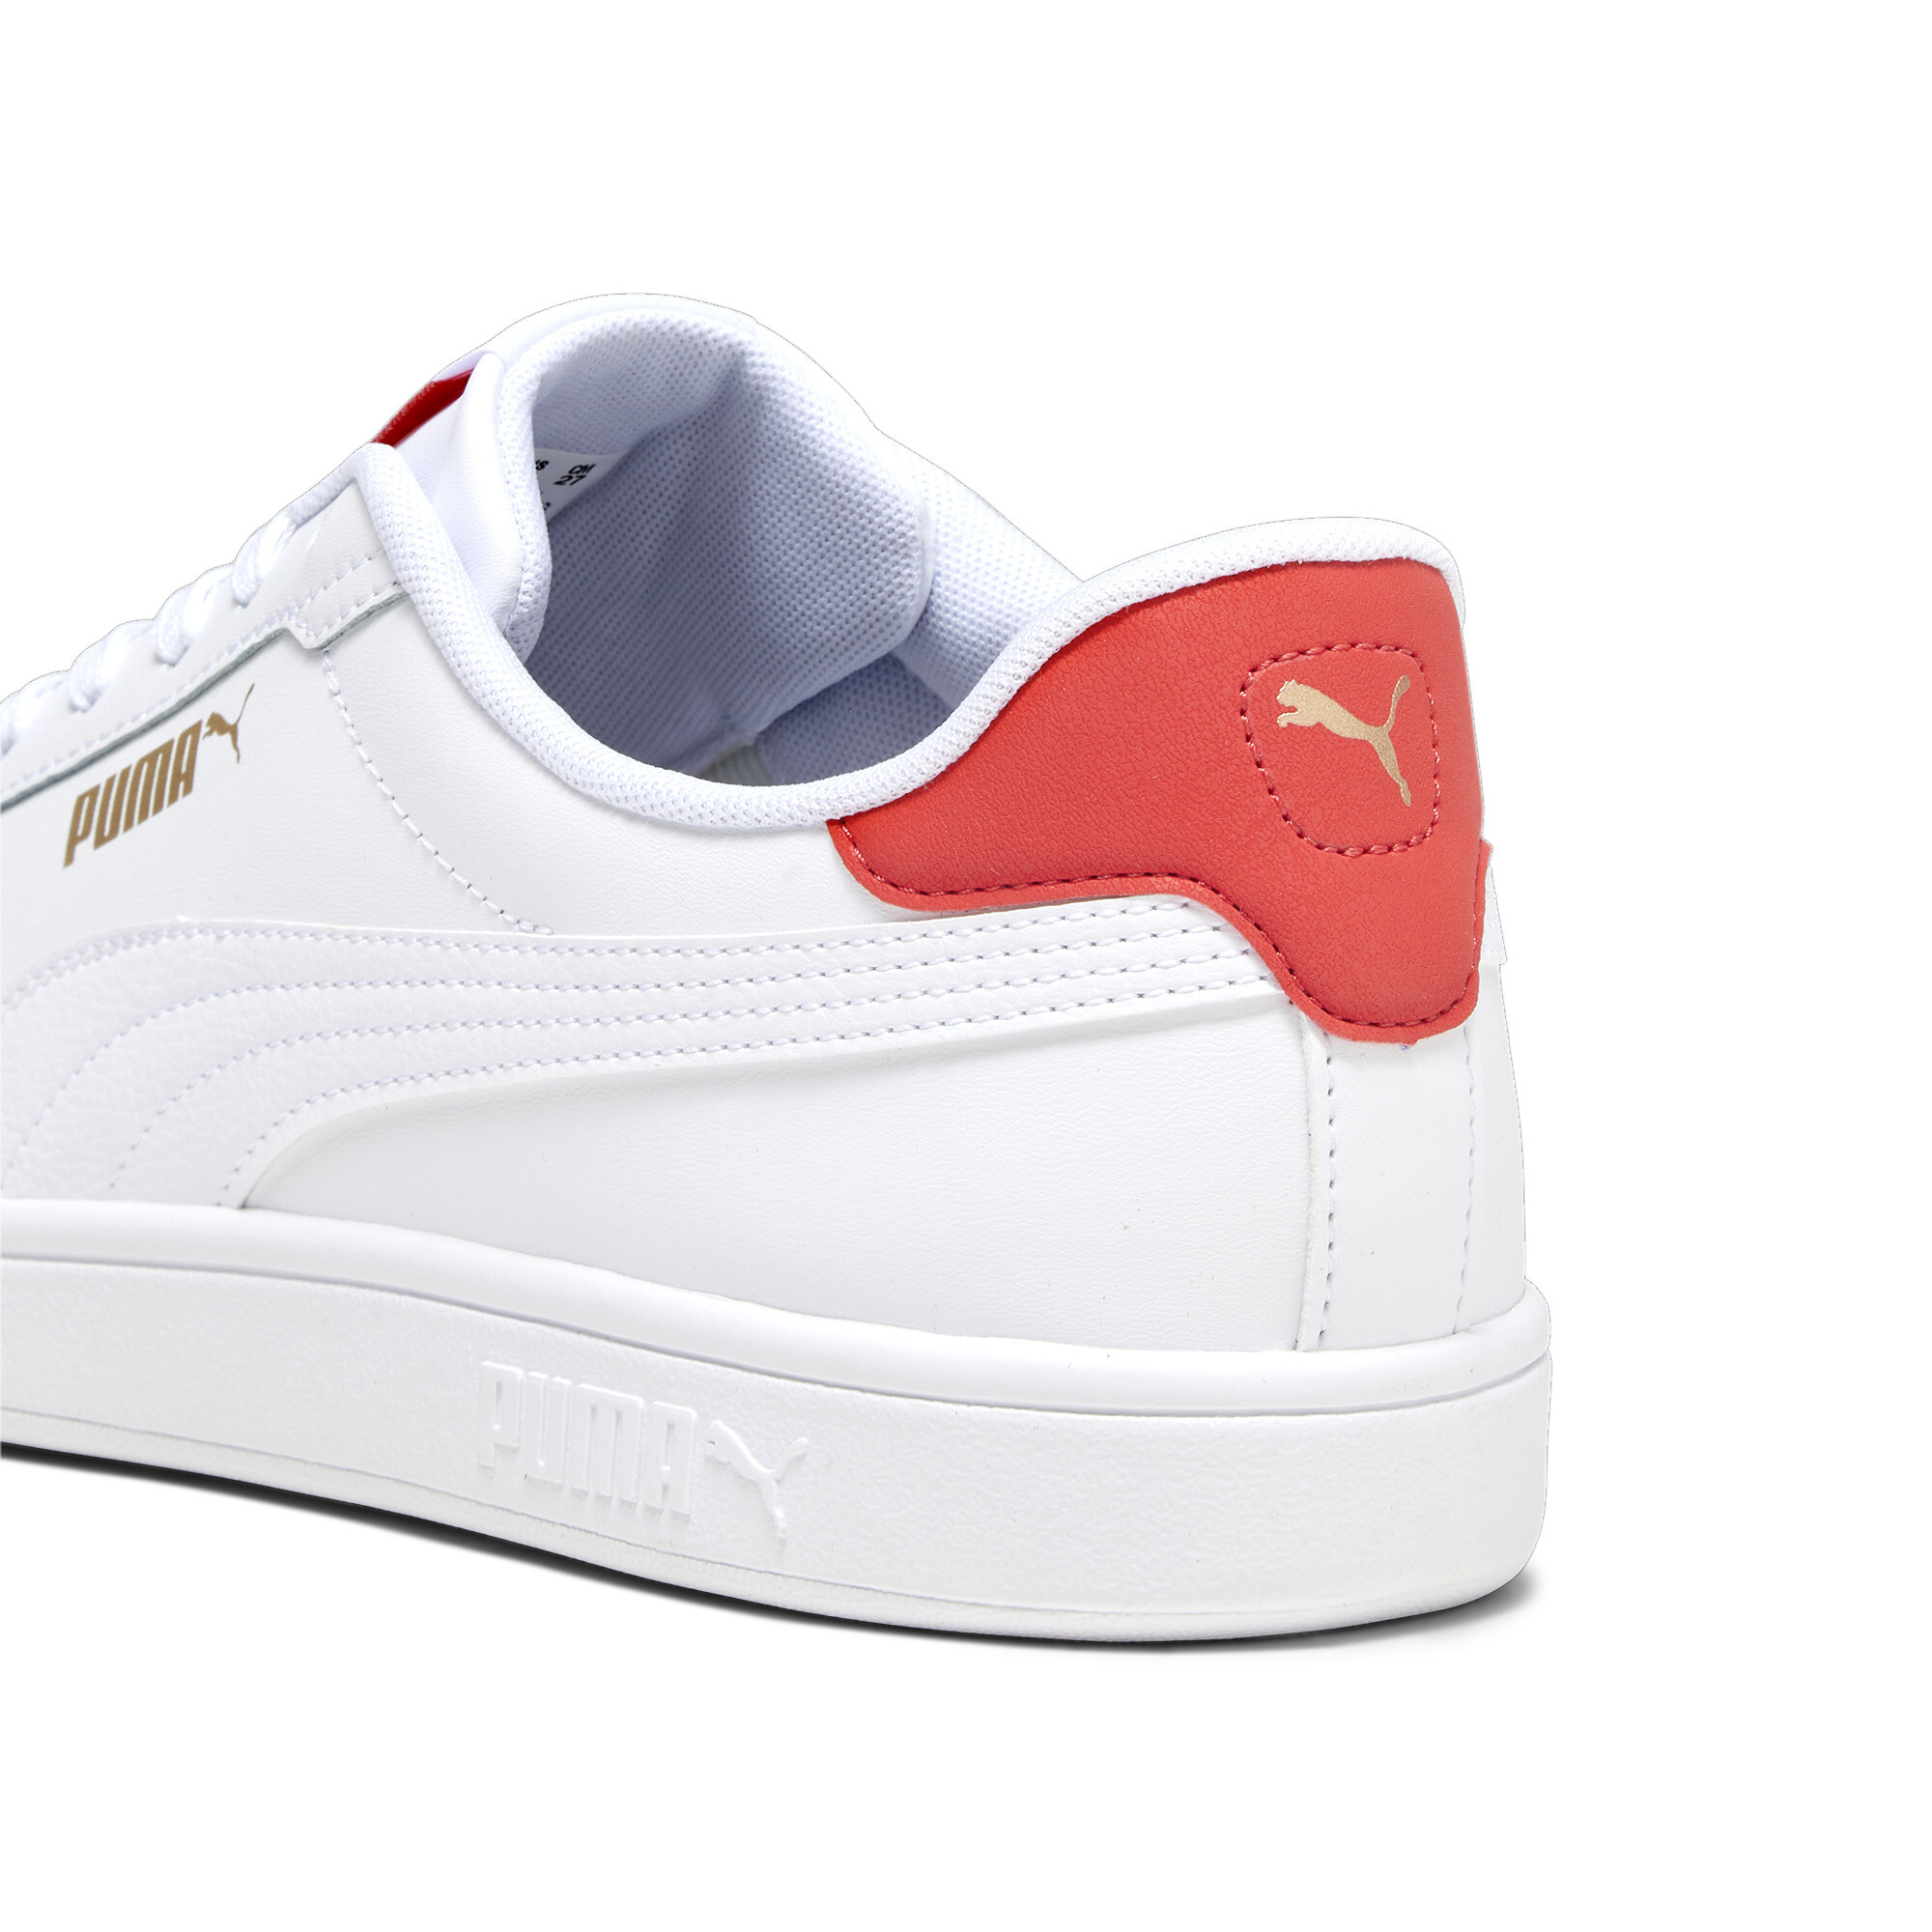 Puma Smash 3.0 L Sneakers, White, Size 48, Shoes